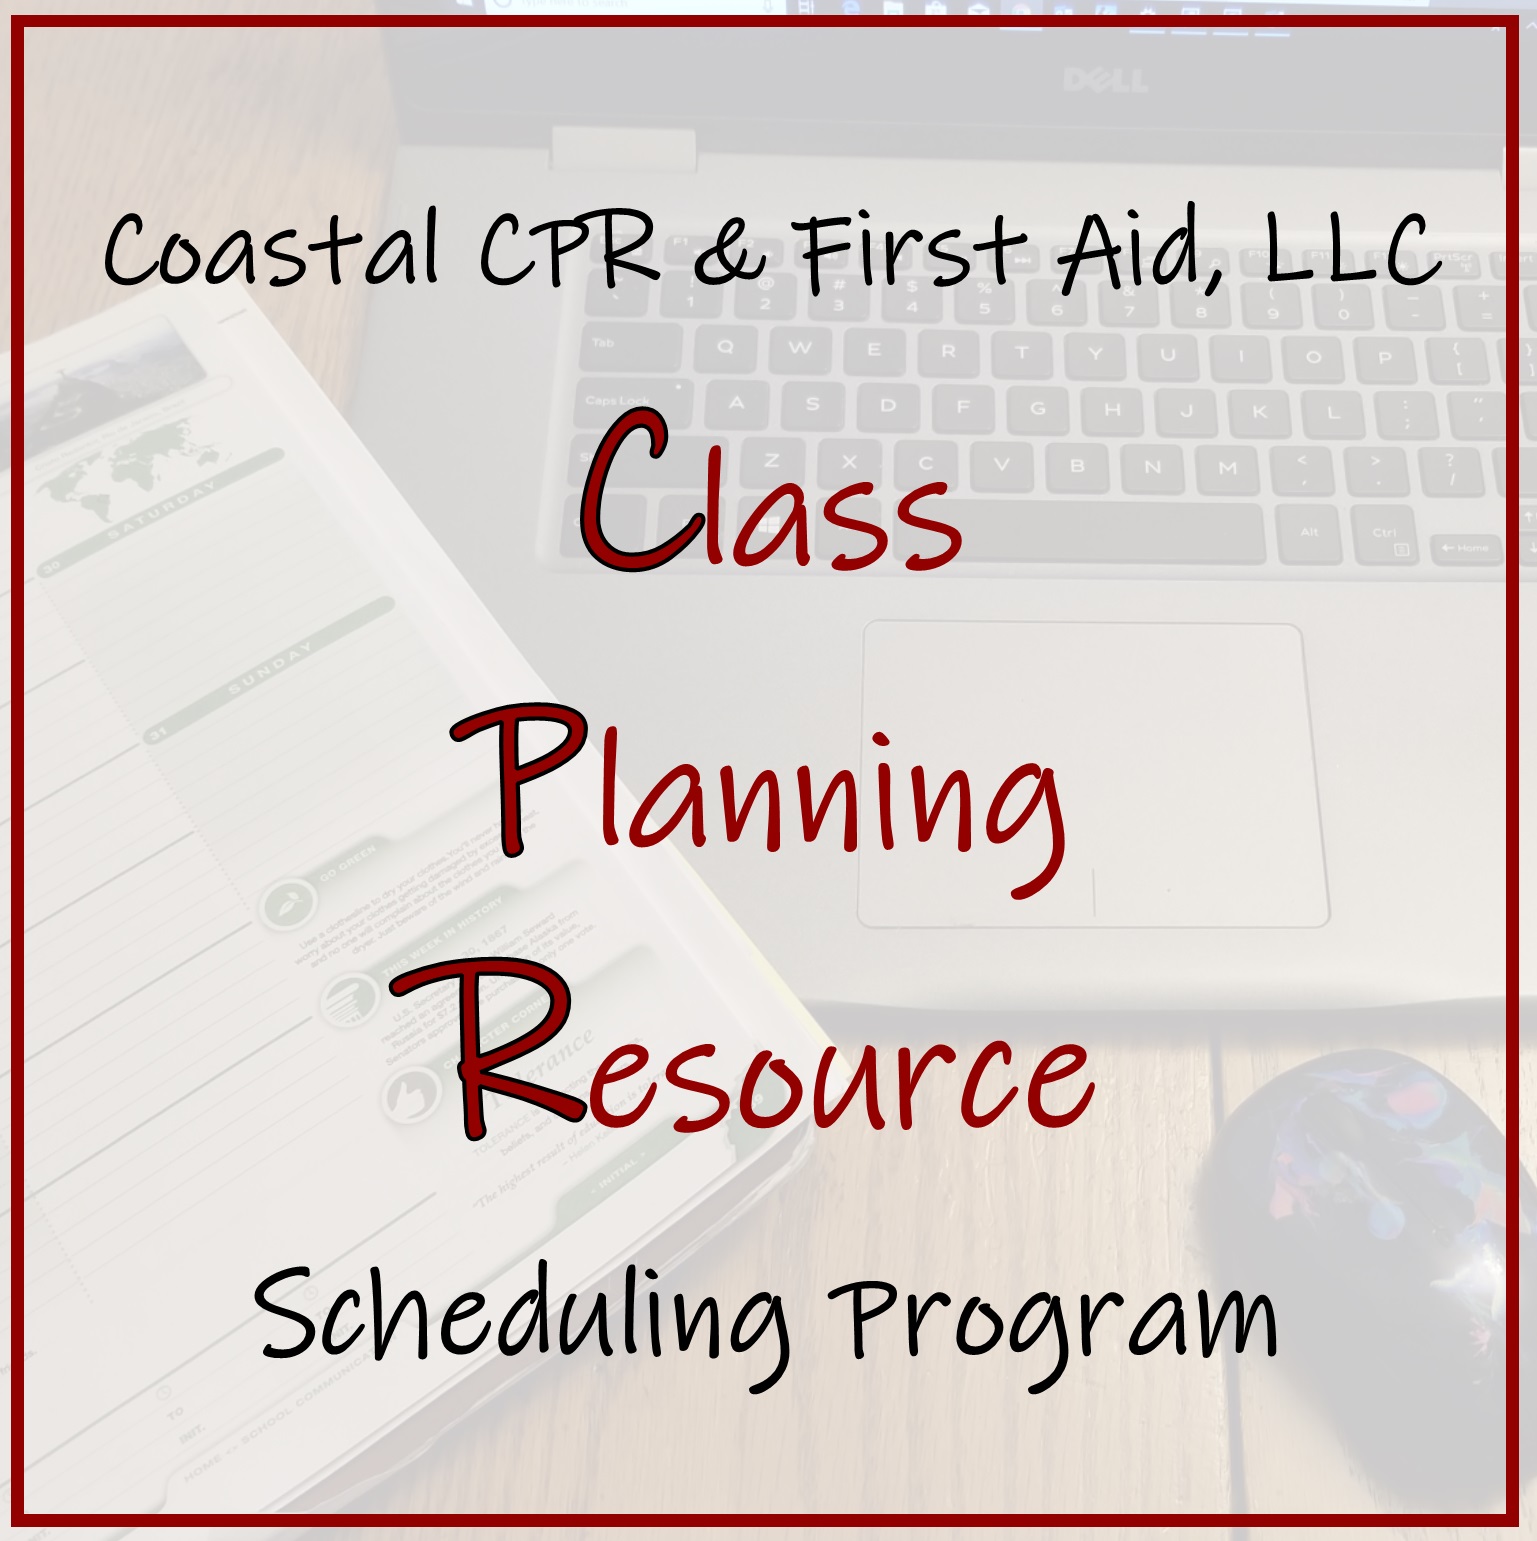 Class Planning Resource Scheduling Program